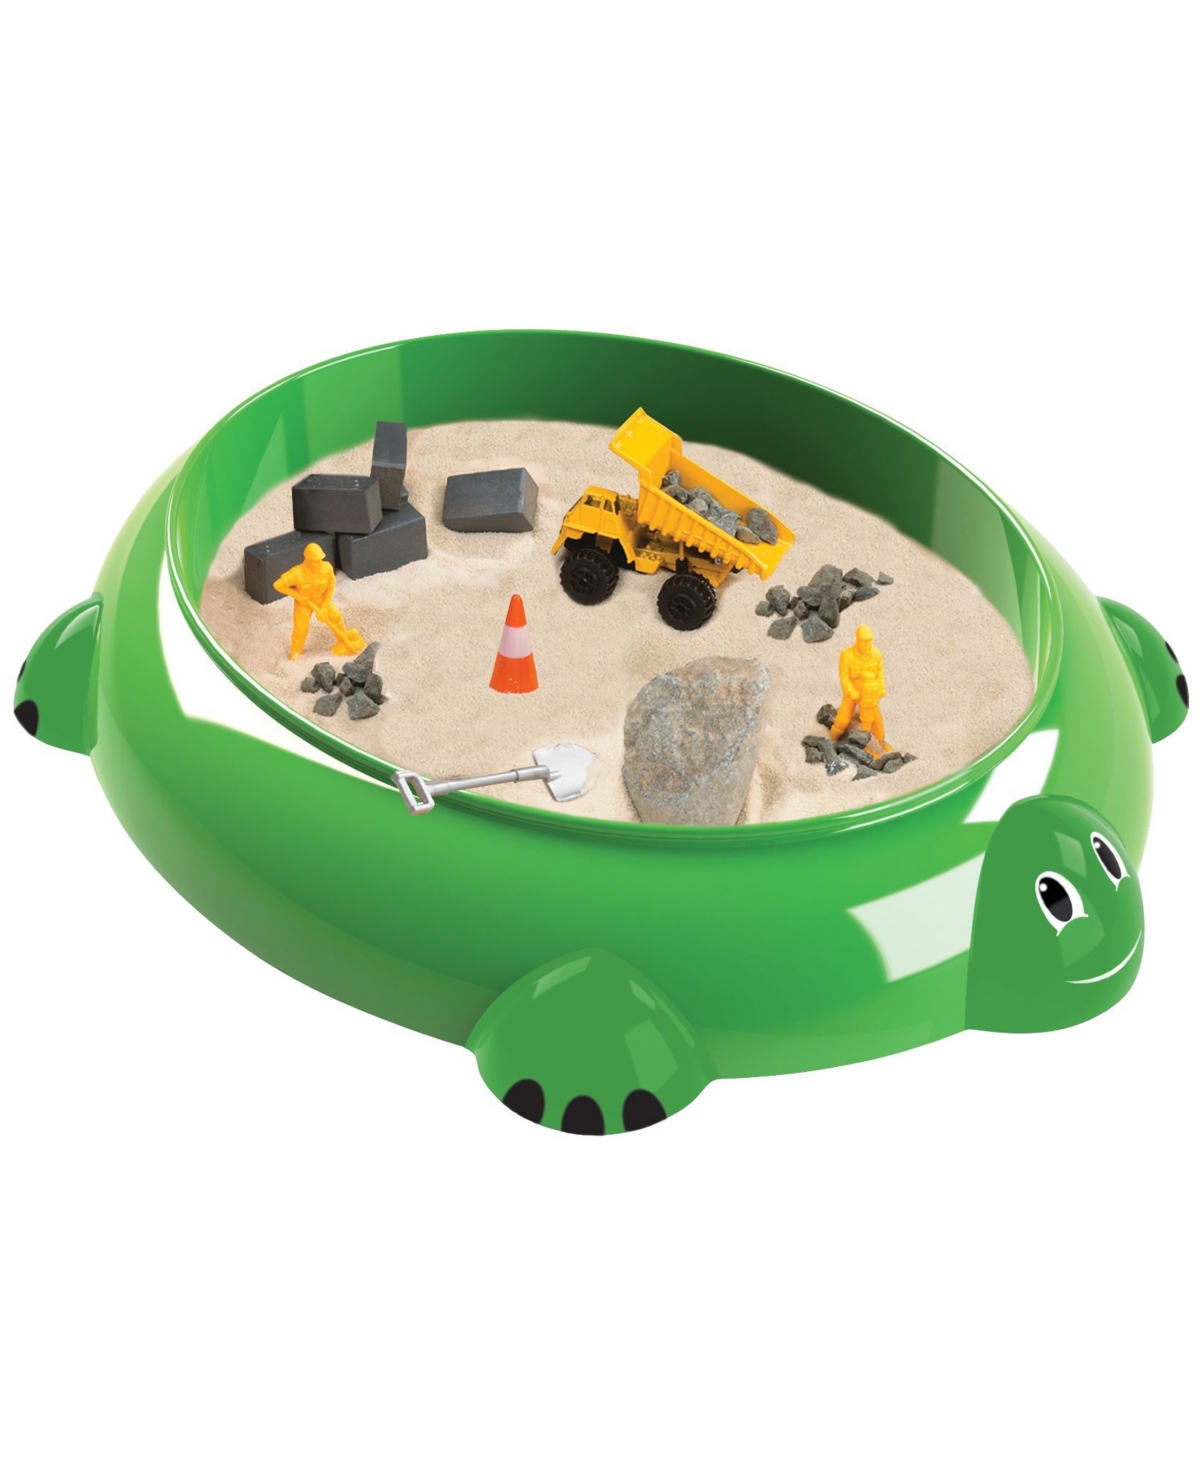 Sandbox Critters Play Set - Sea Turtle Tabletop Imagination Toy